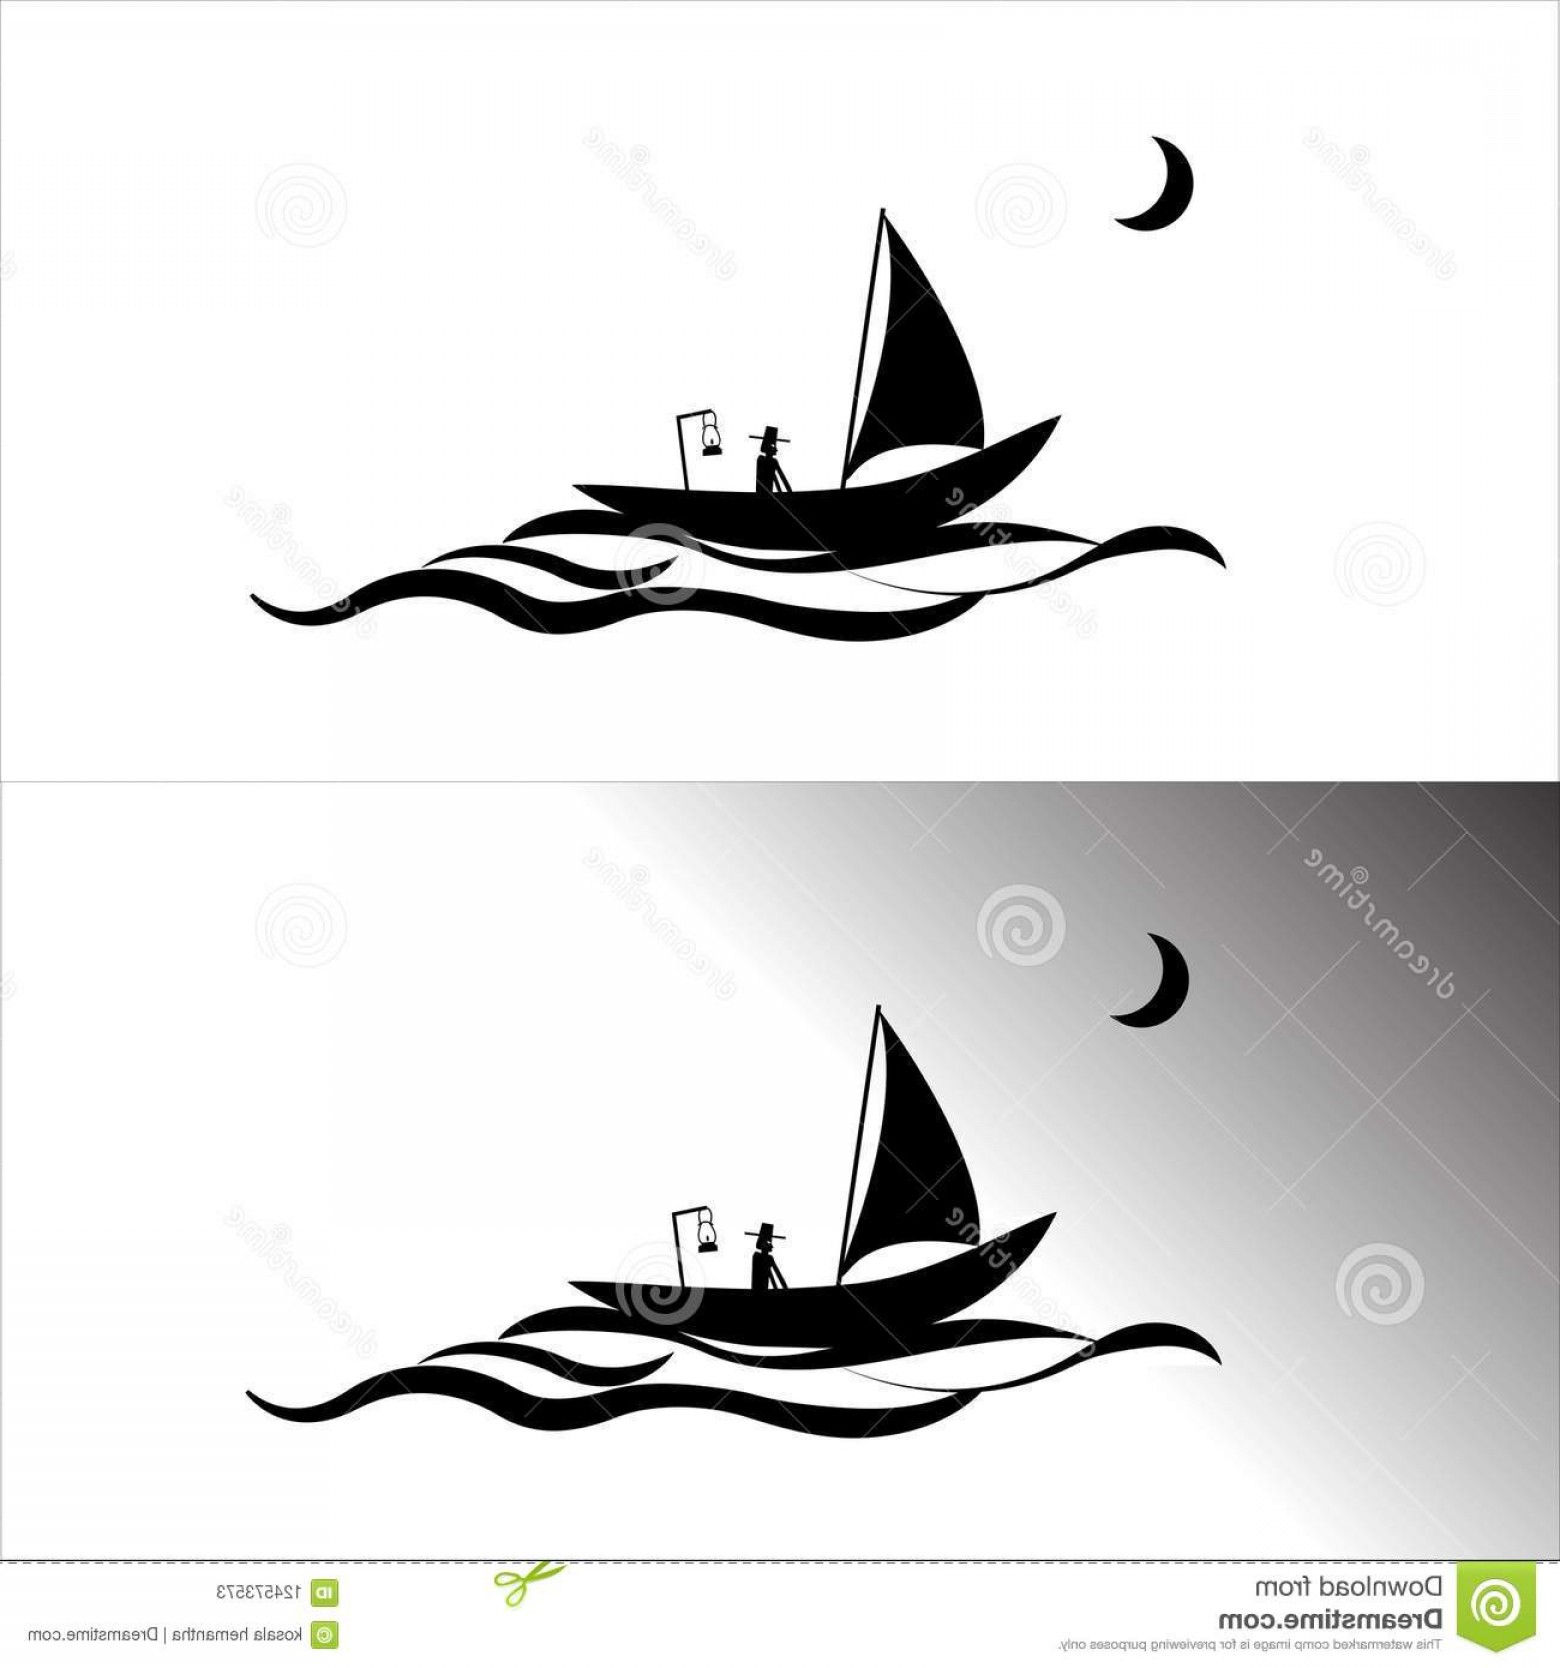 Fisherman vector illustrator.